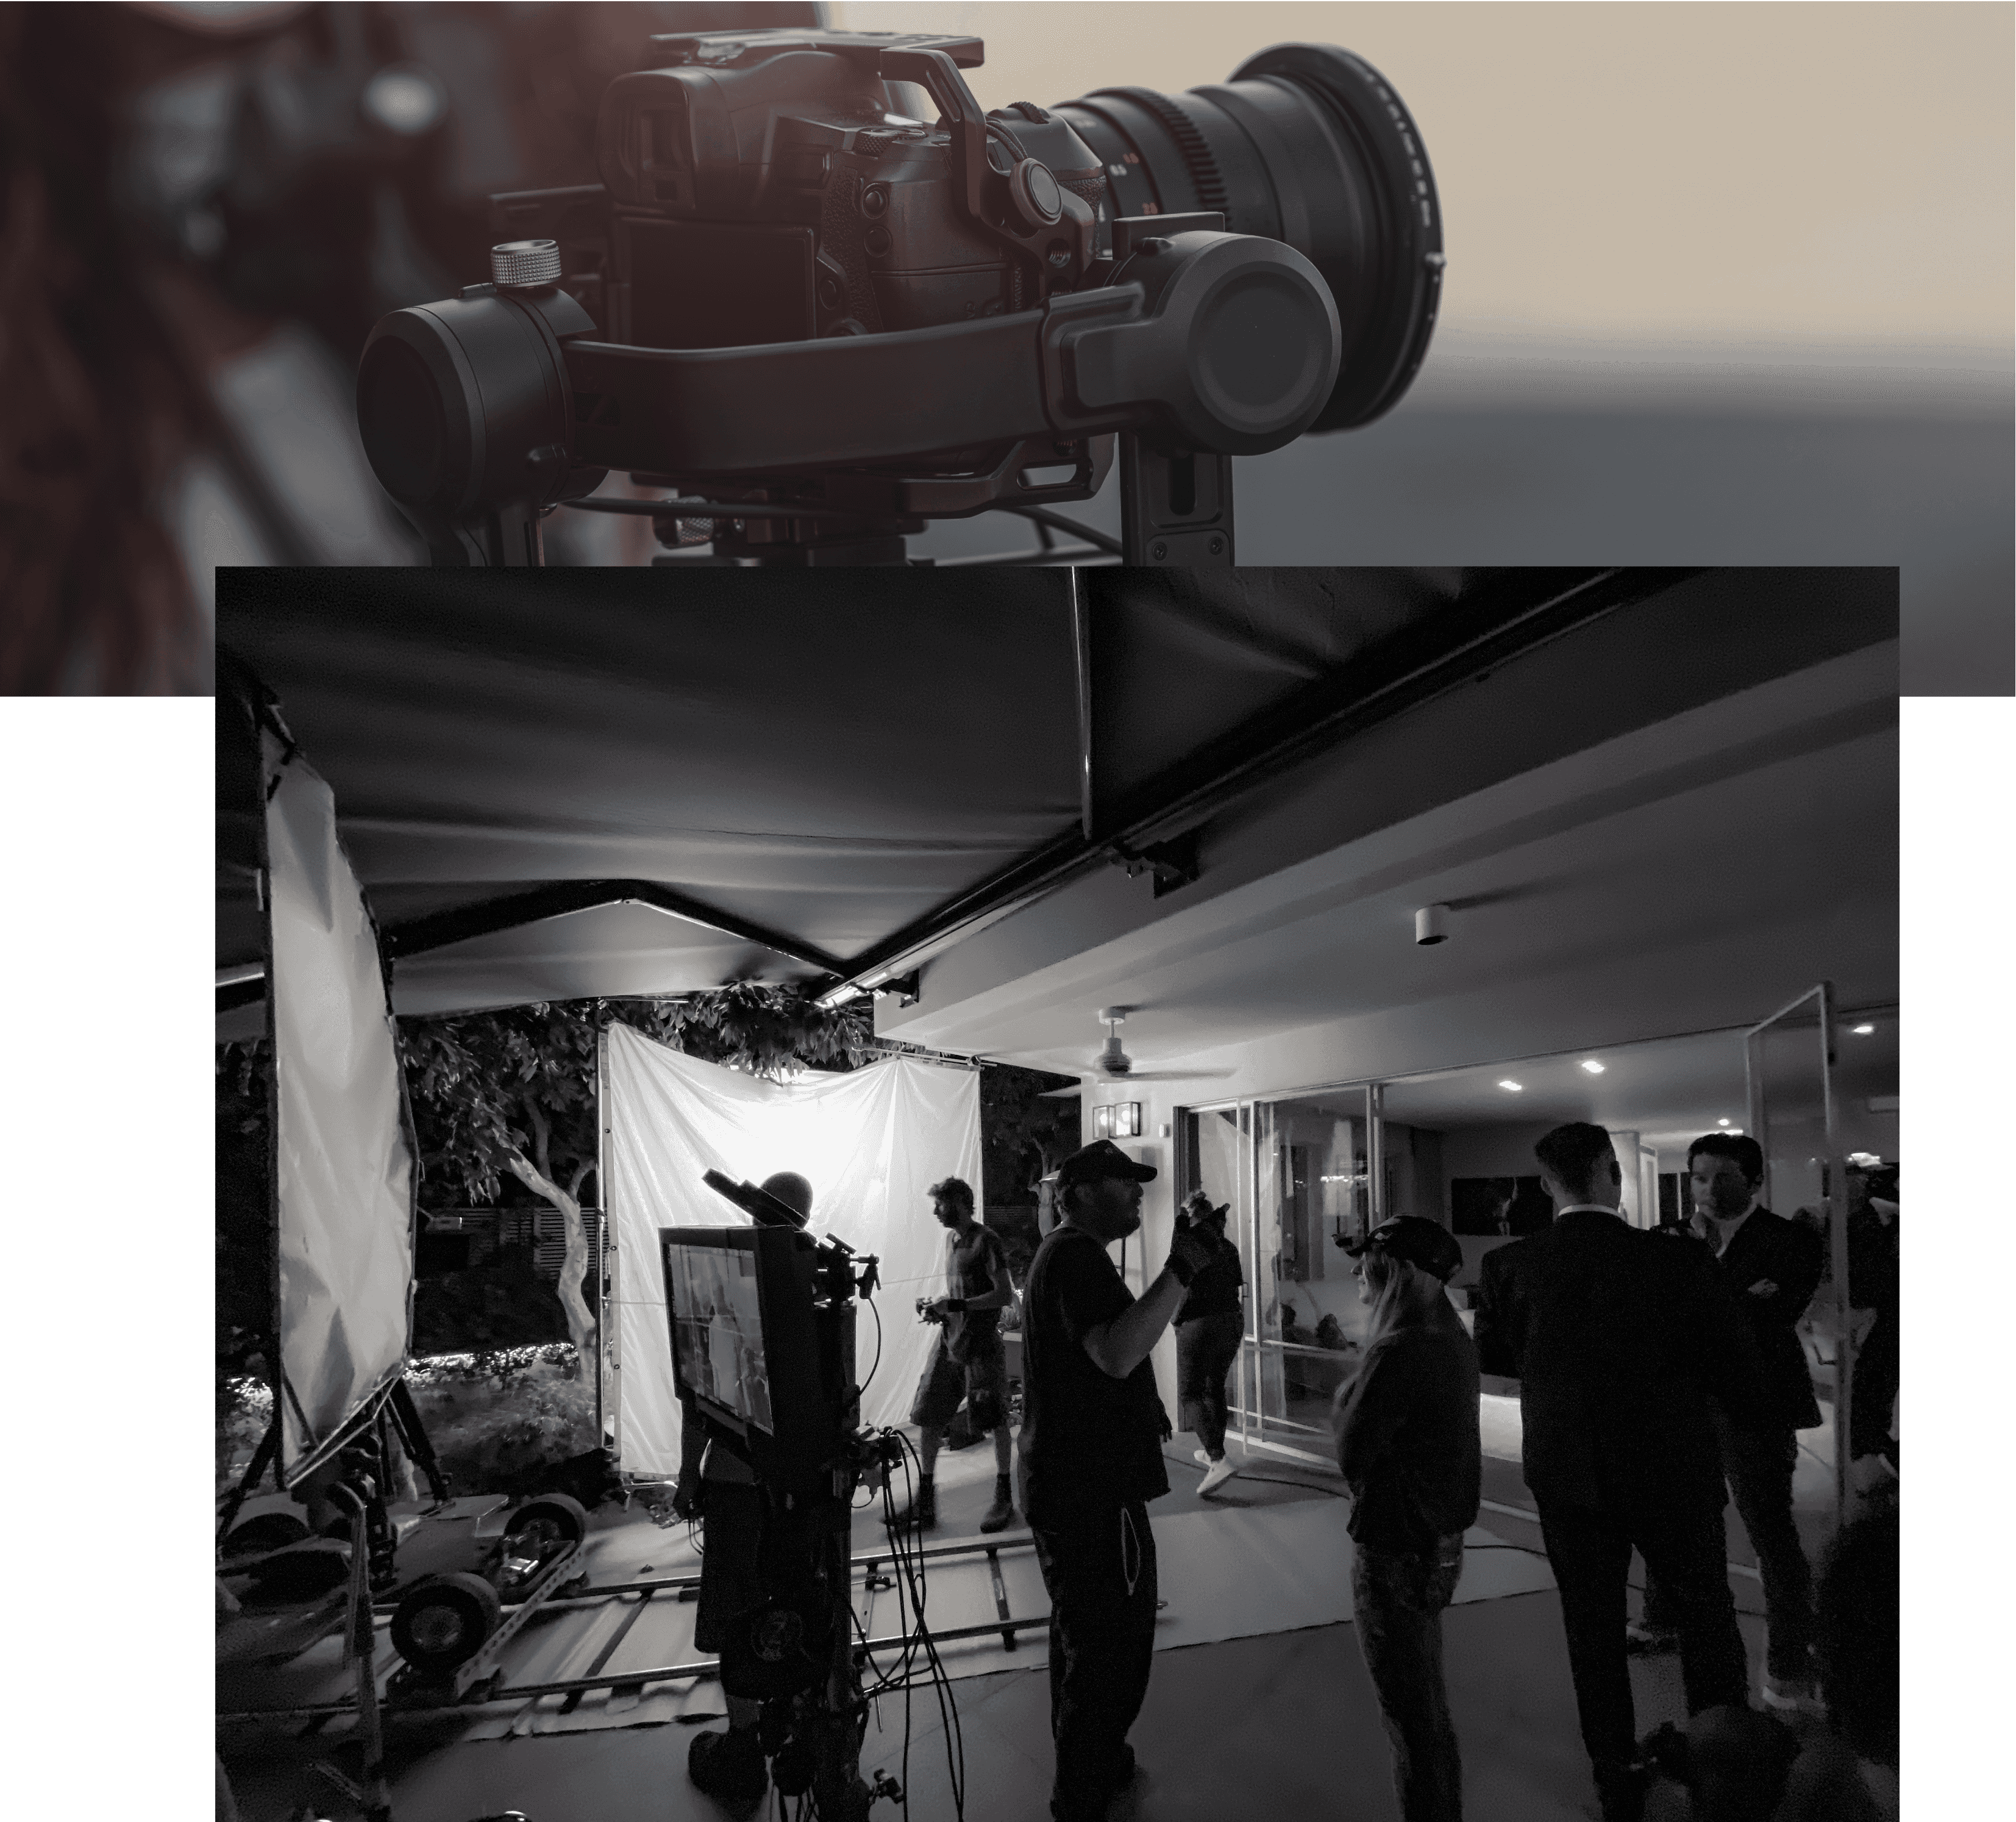 video production crew, equipment, set